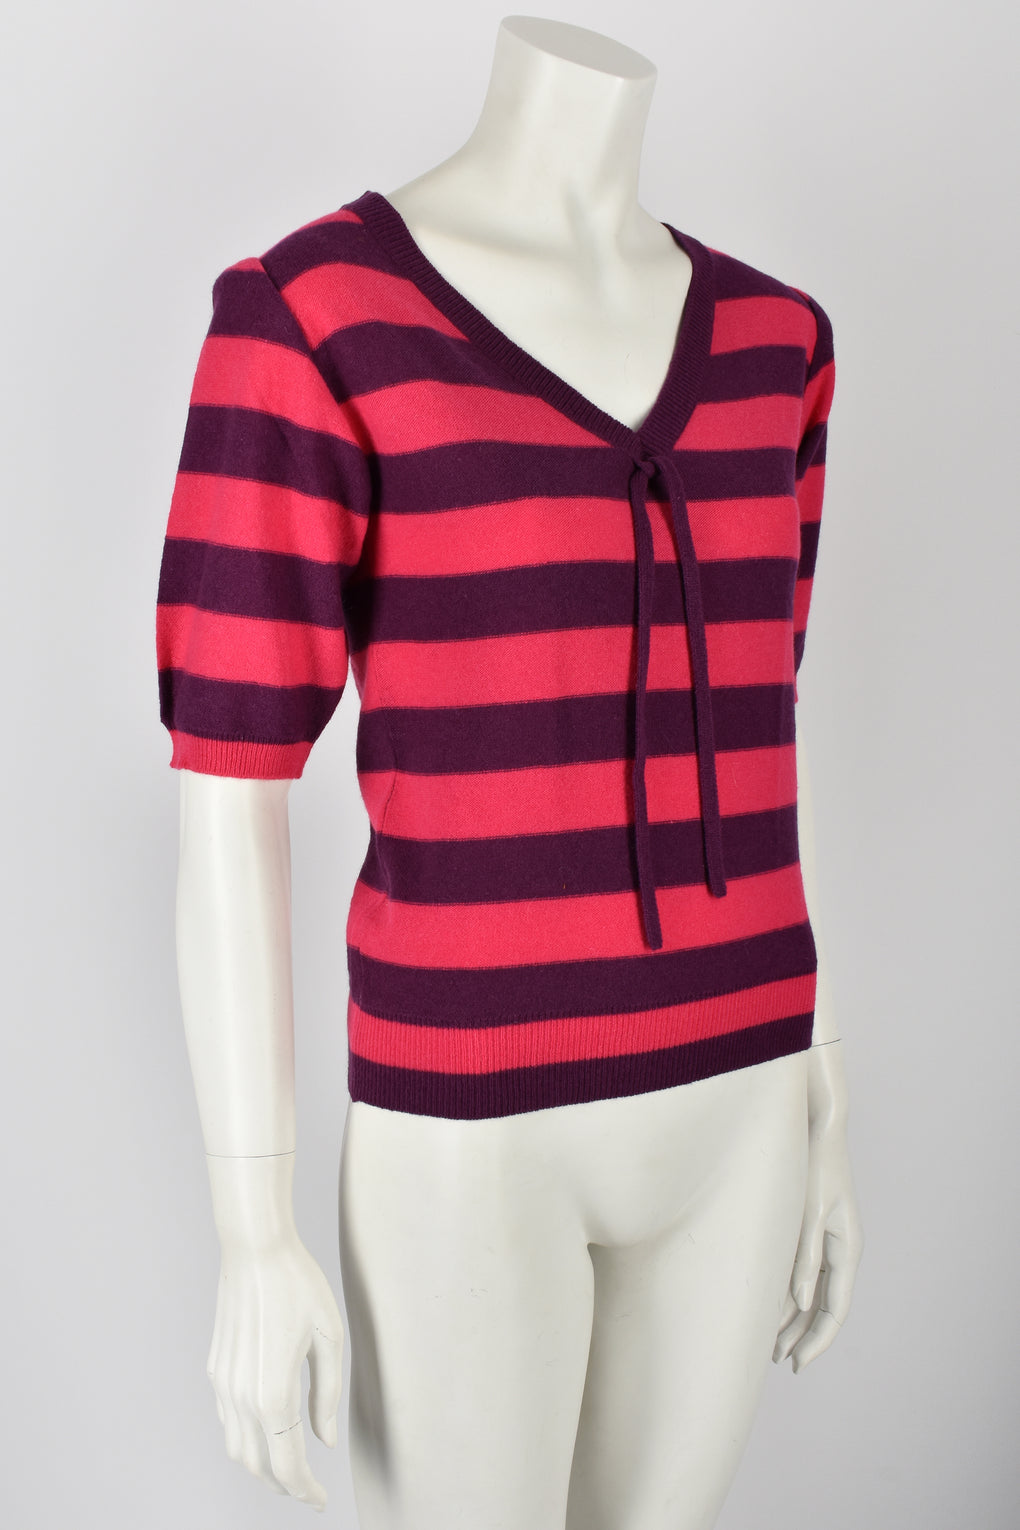 SONIA RYKIEL 70s striped wool sweater M